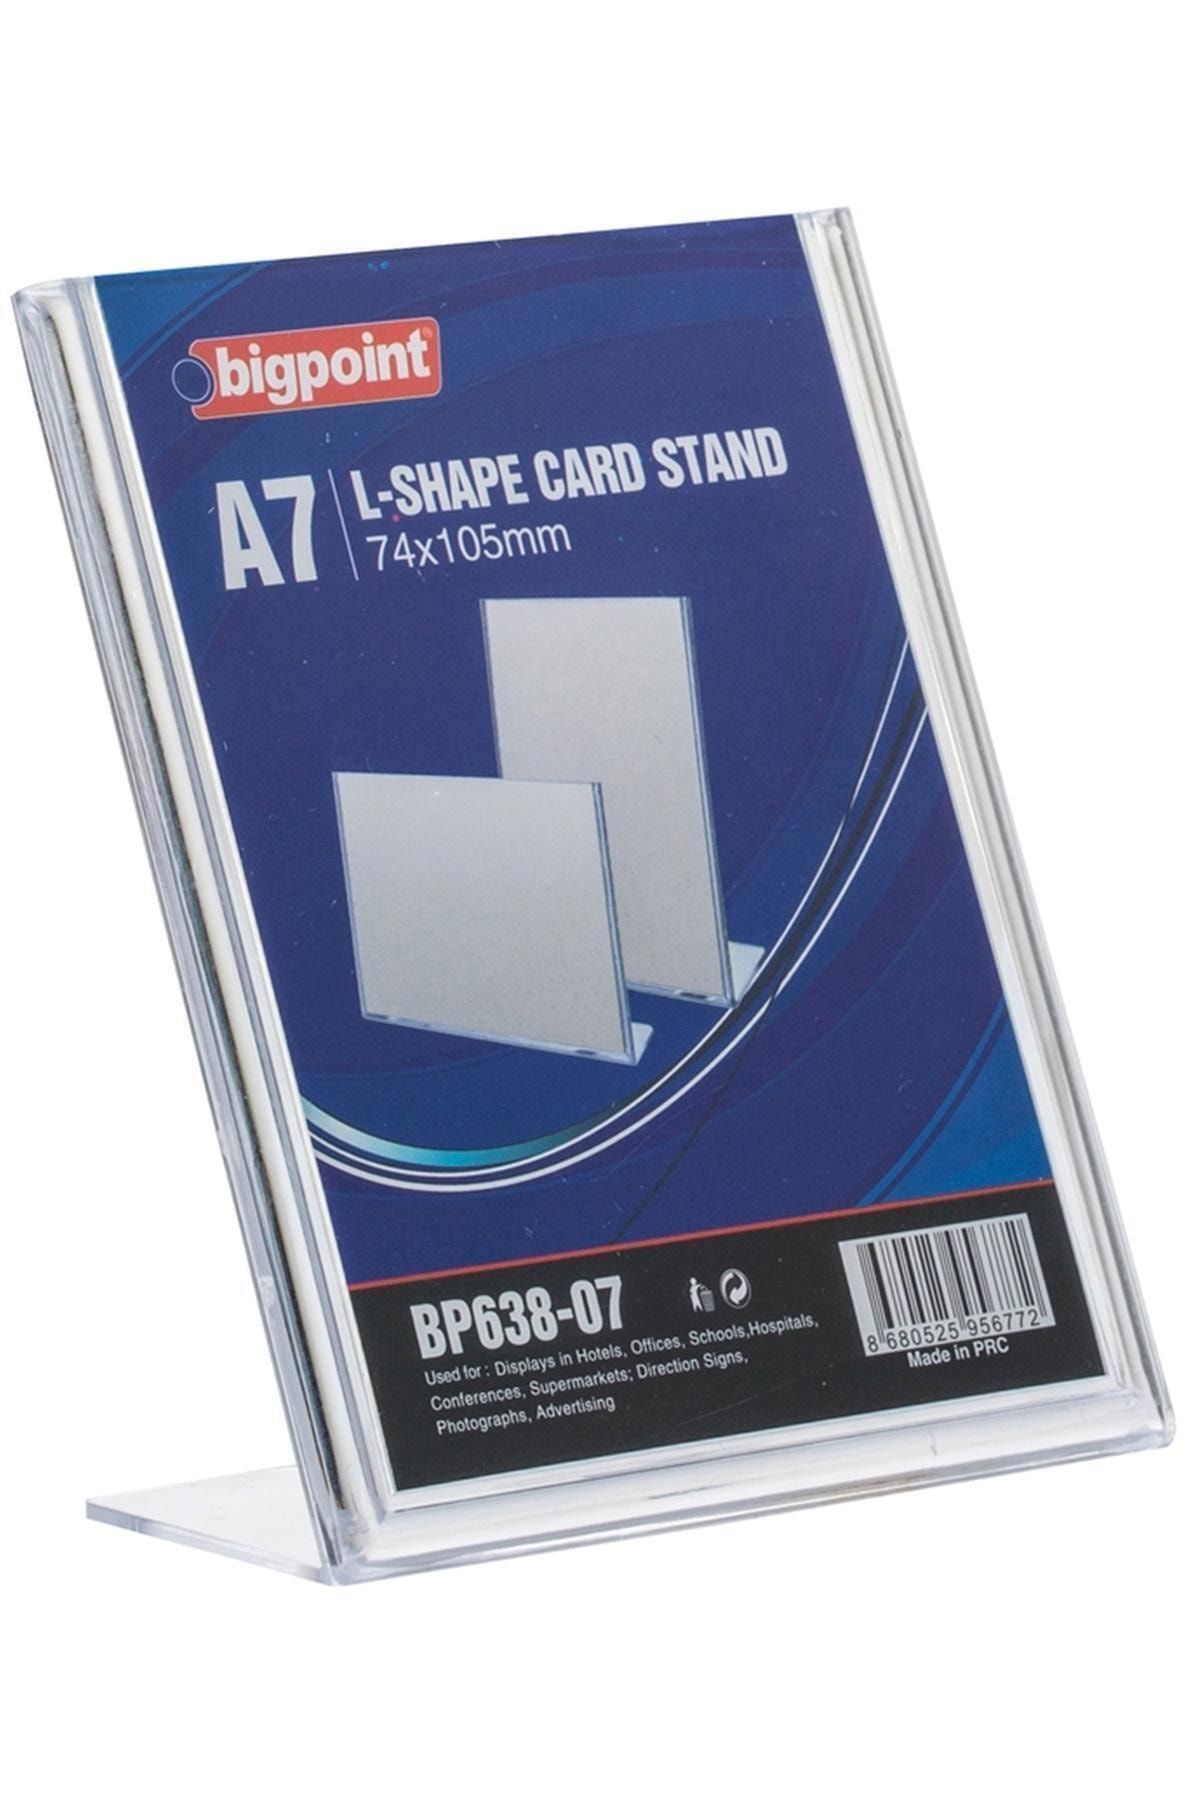 Bigpoint Kart Standı Dikey A7